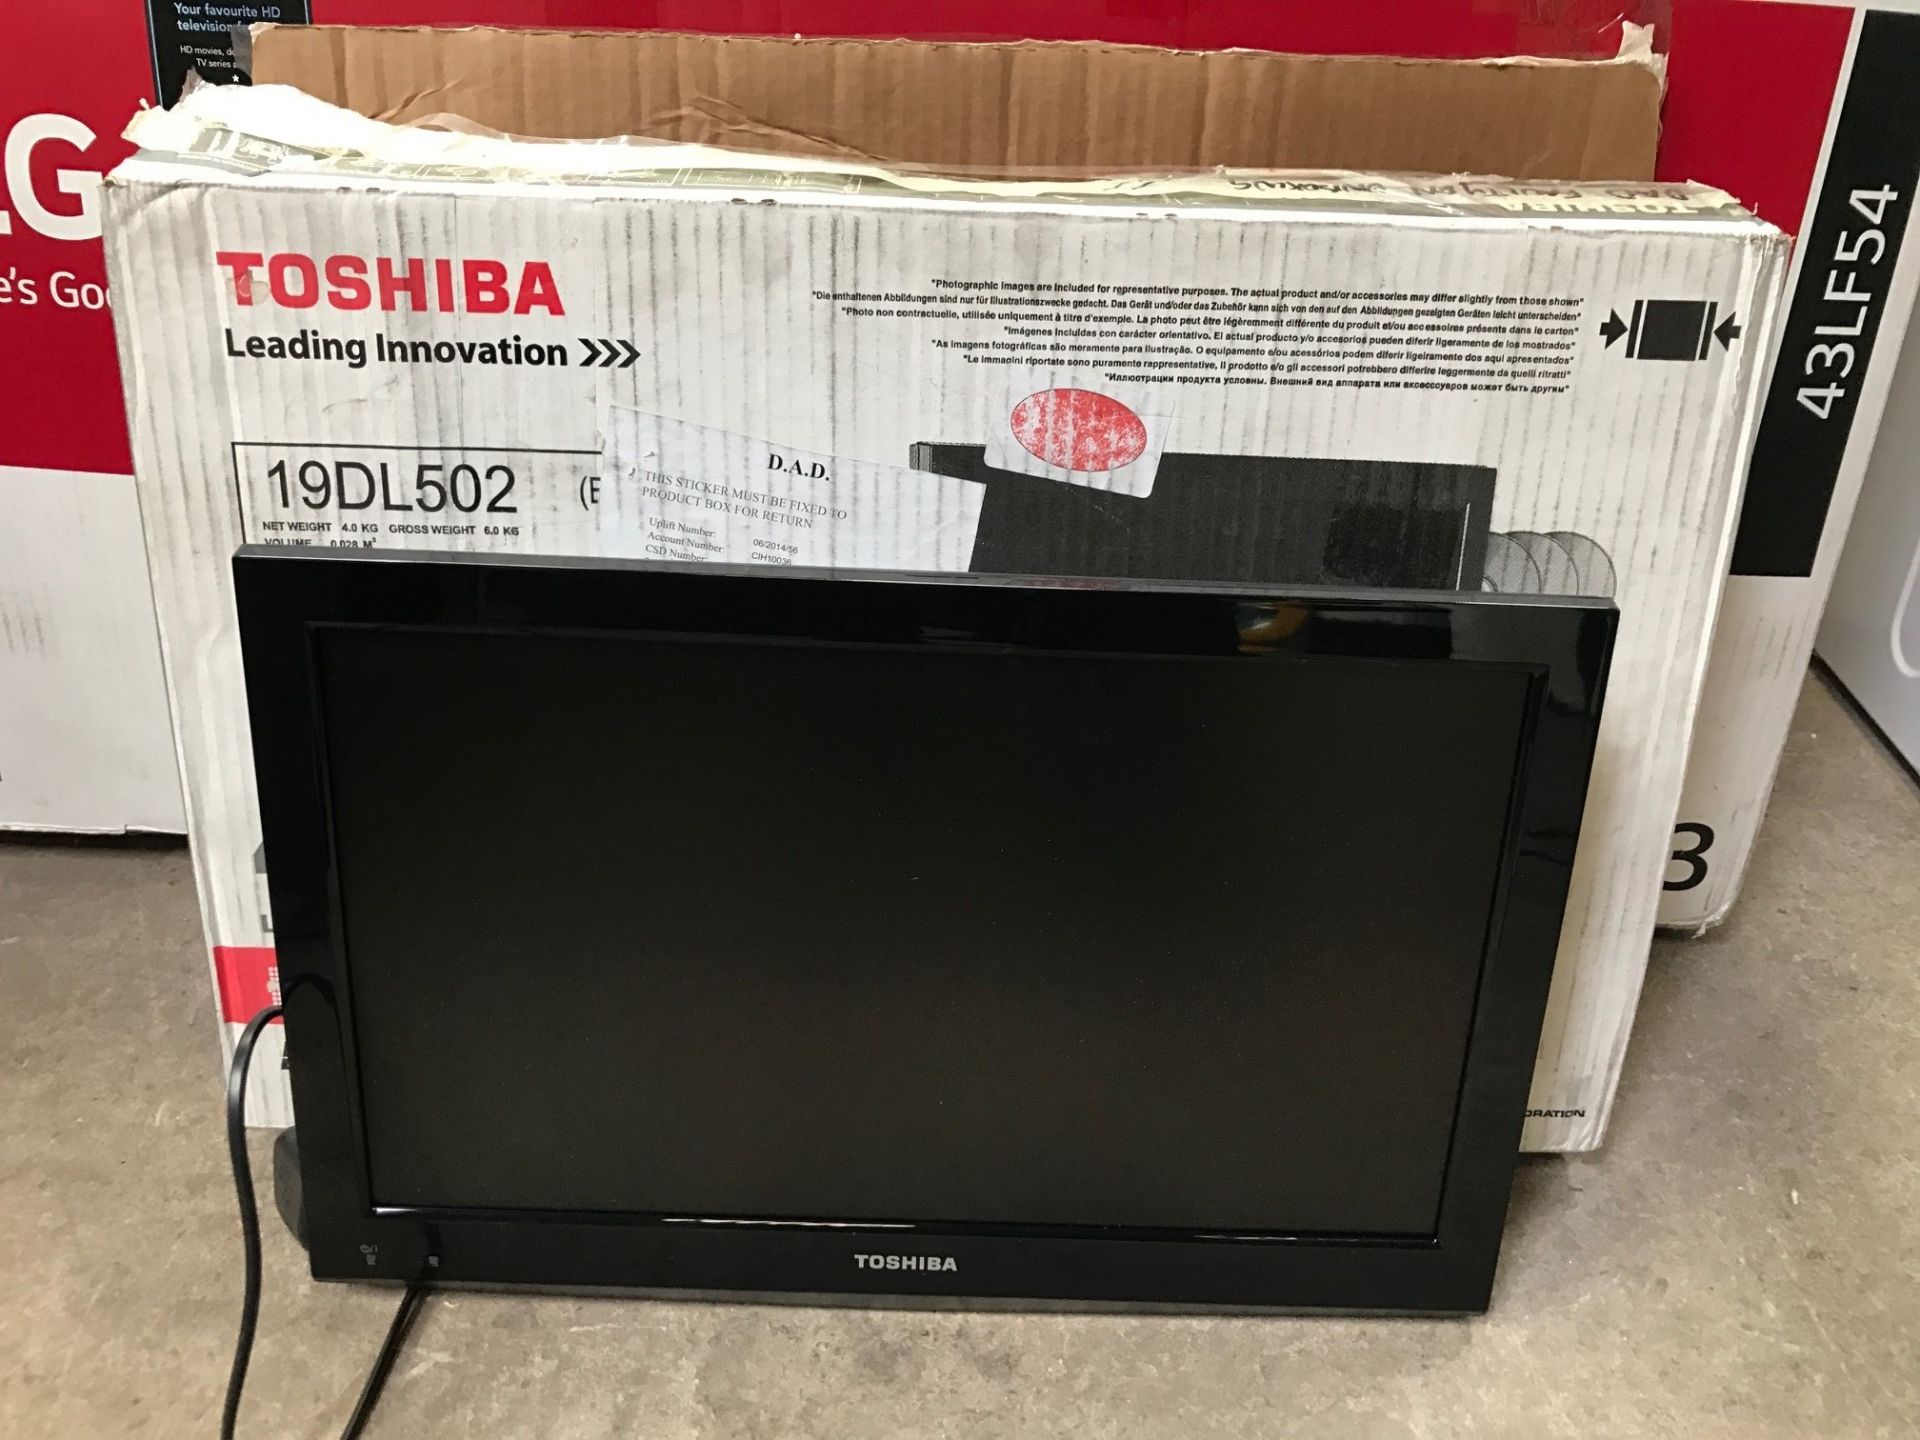 Toshiba 19DL502 TV